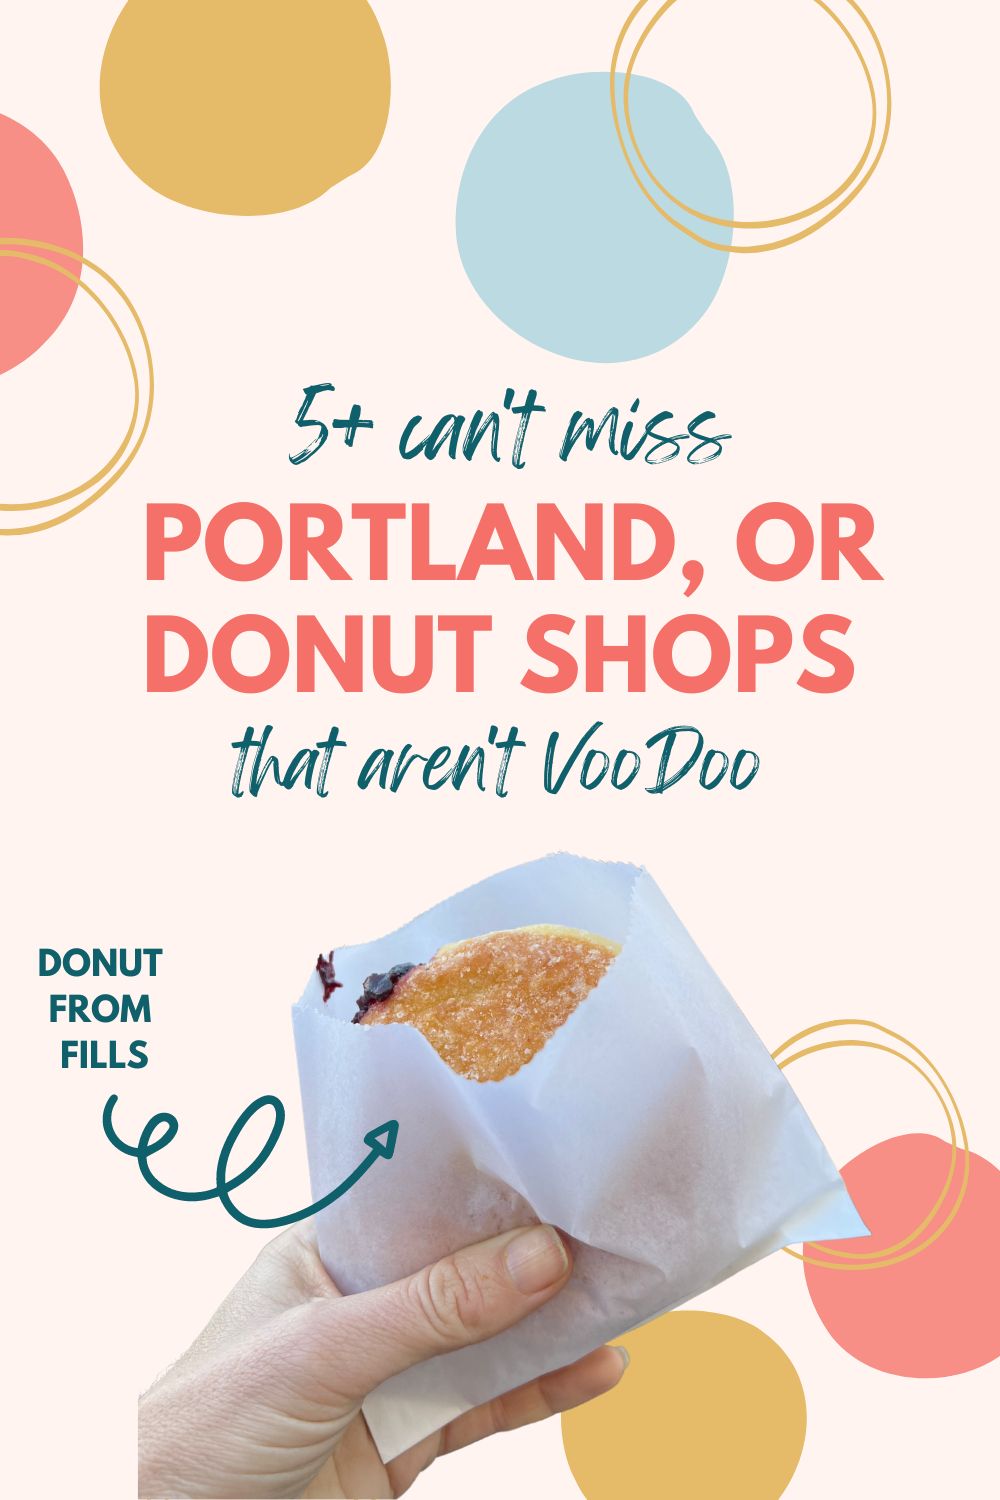 Title Image: 5+ Best PDX Donut Shops That Aren't Voodoo